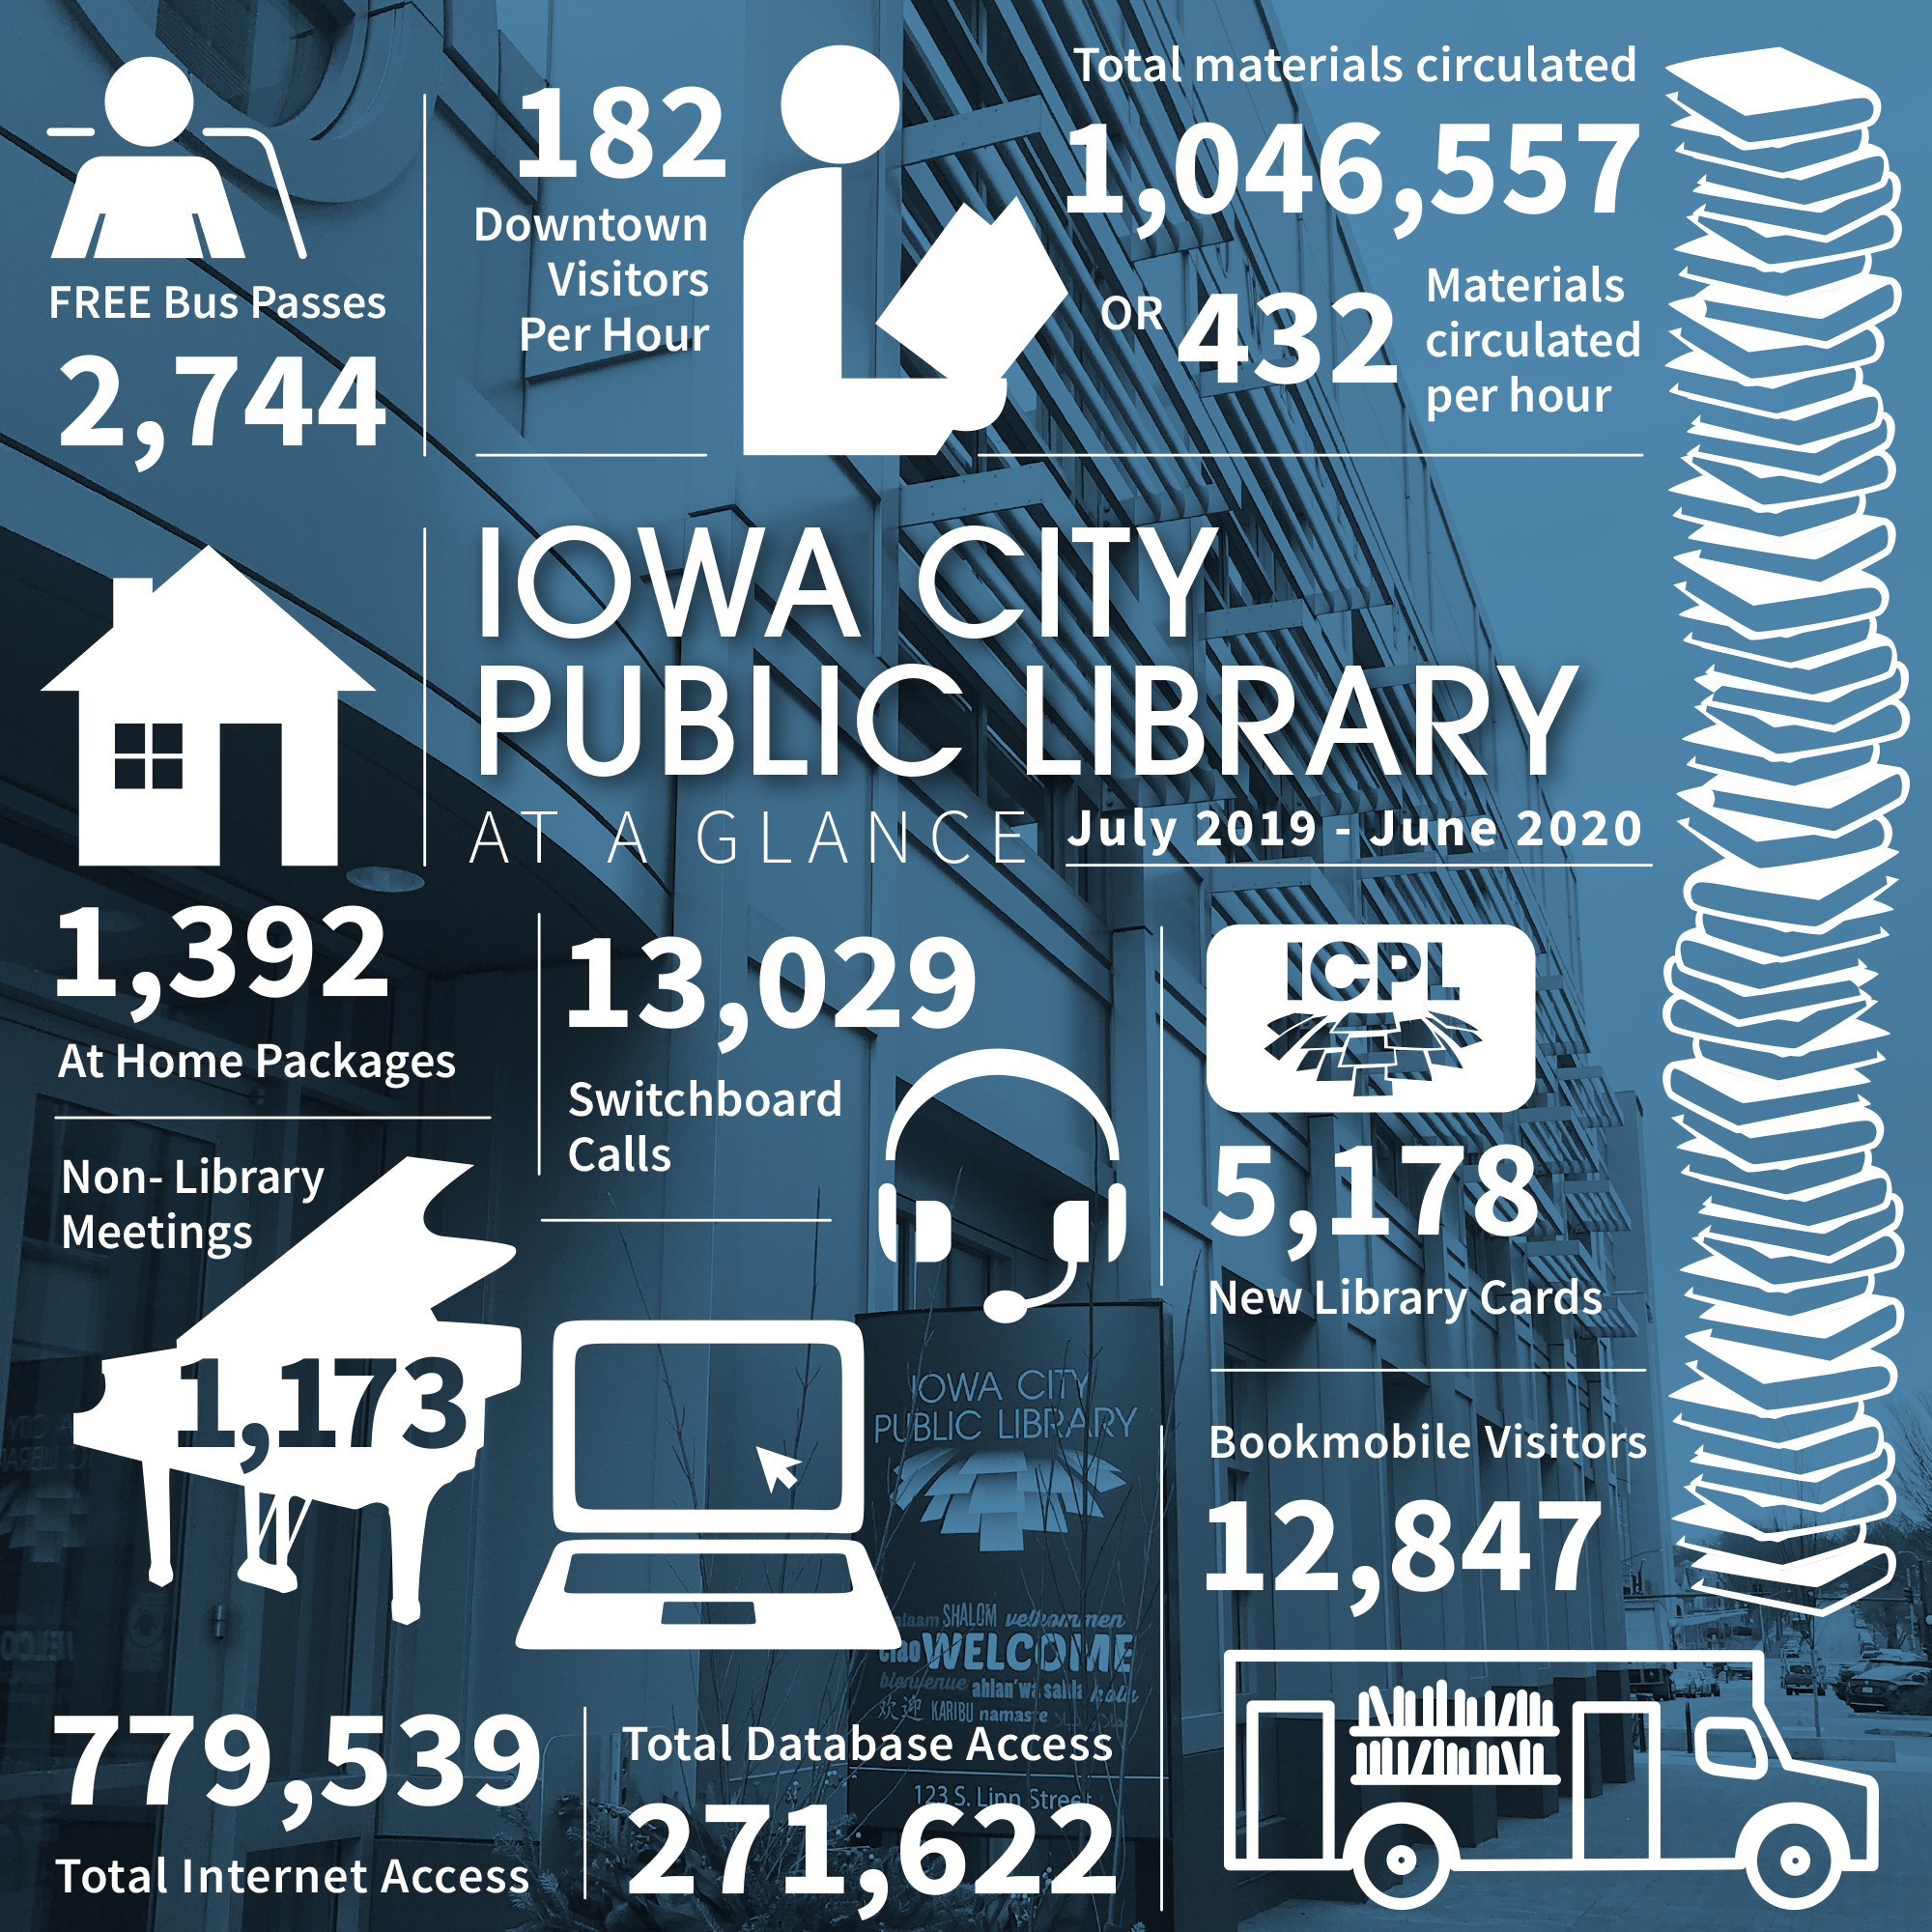 Iowa City Public Library at a glance